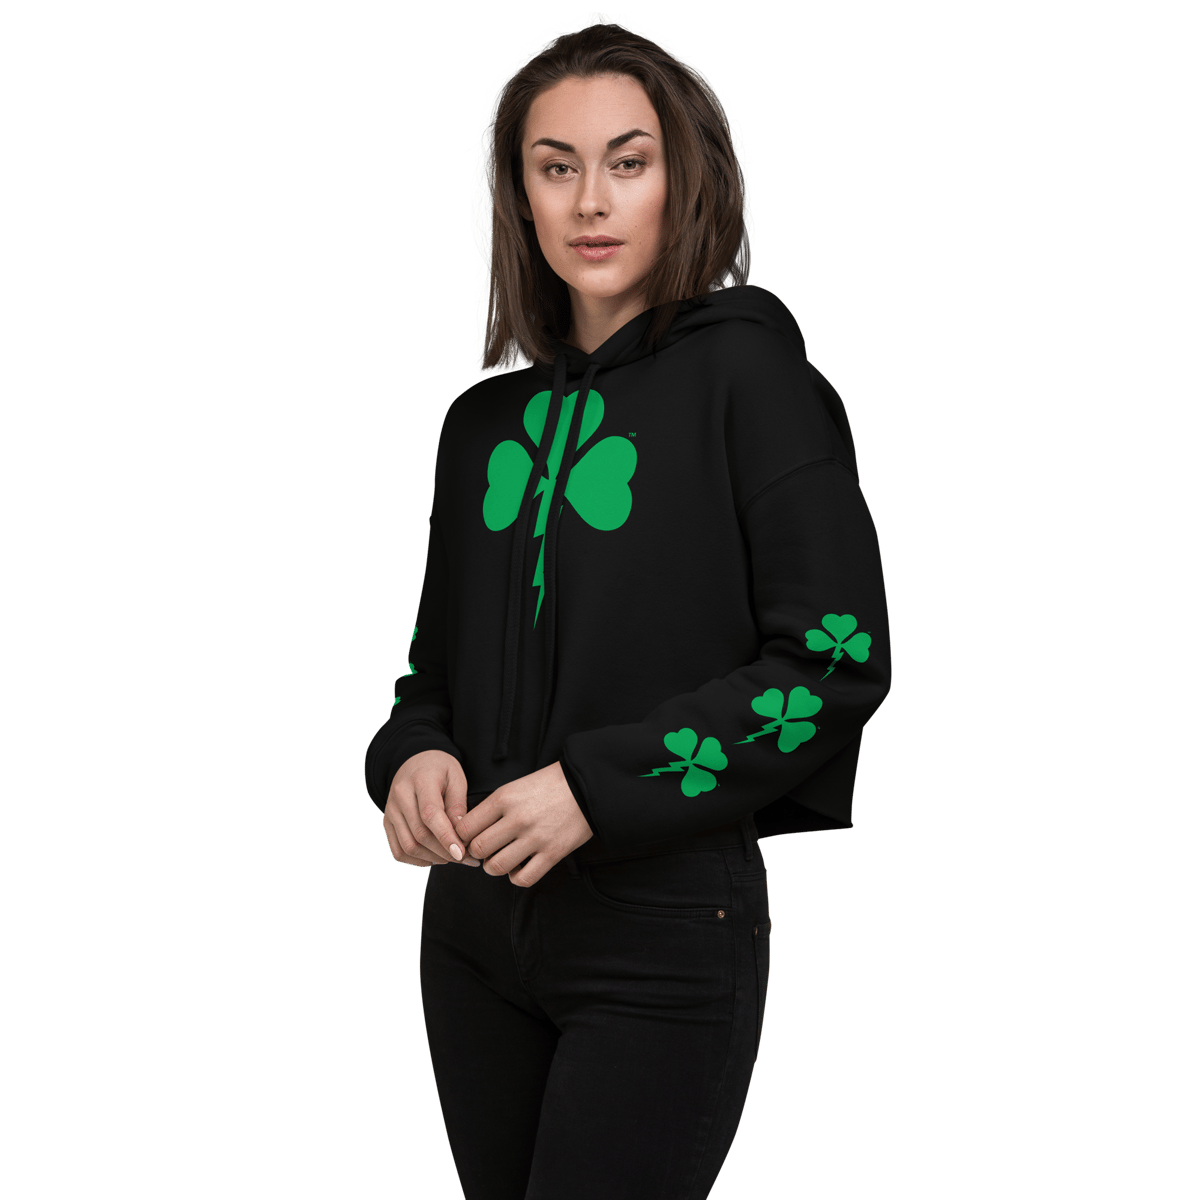 Shamrock Capri Leggings for Women Womens Irish Green Capri Pants W